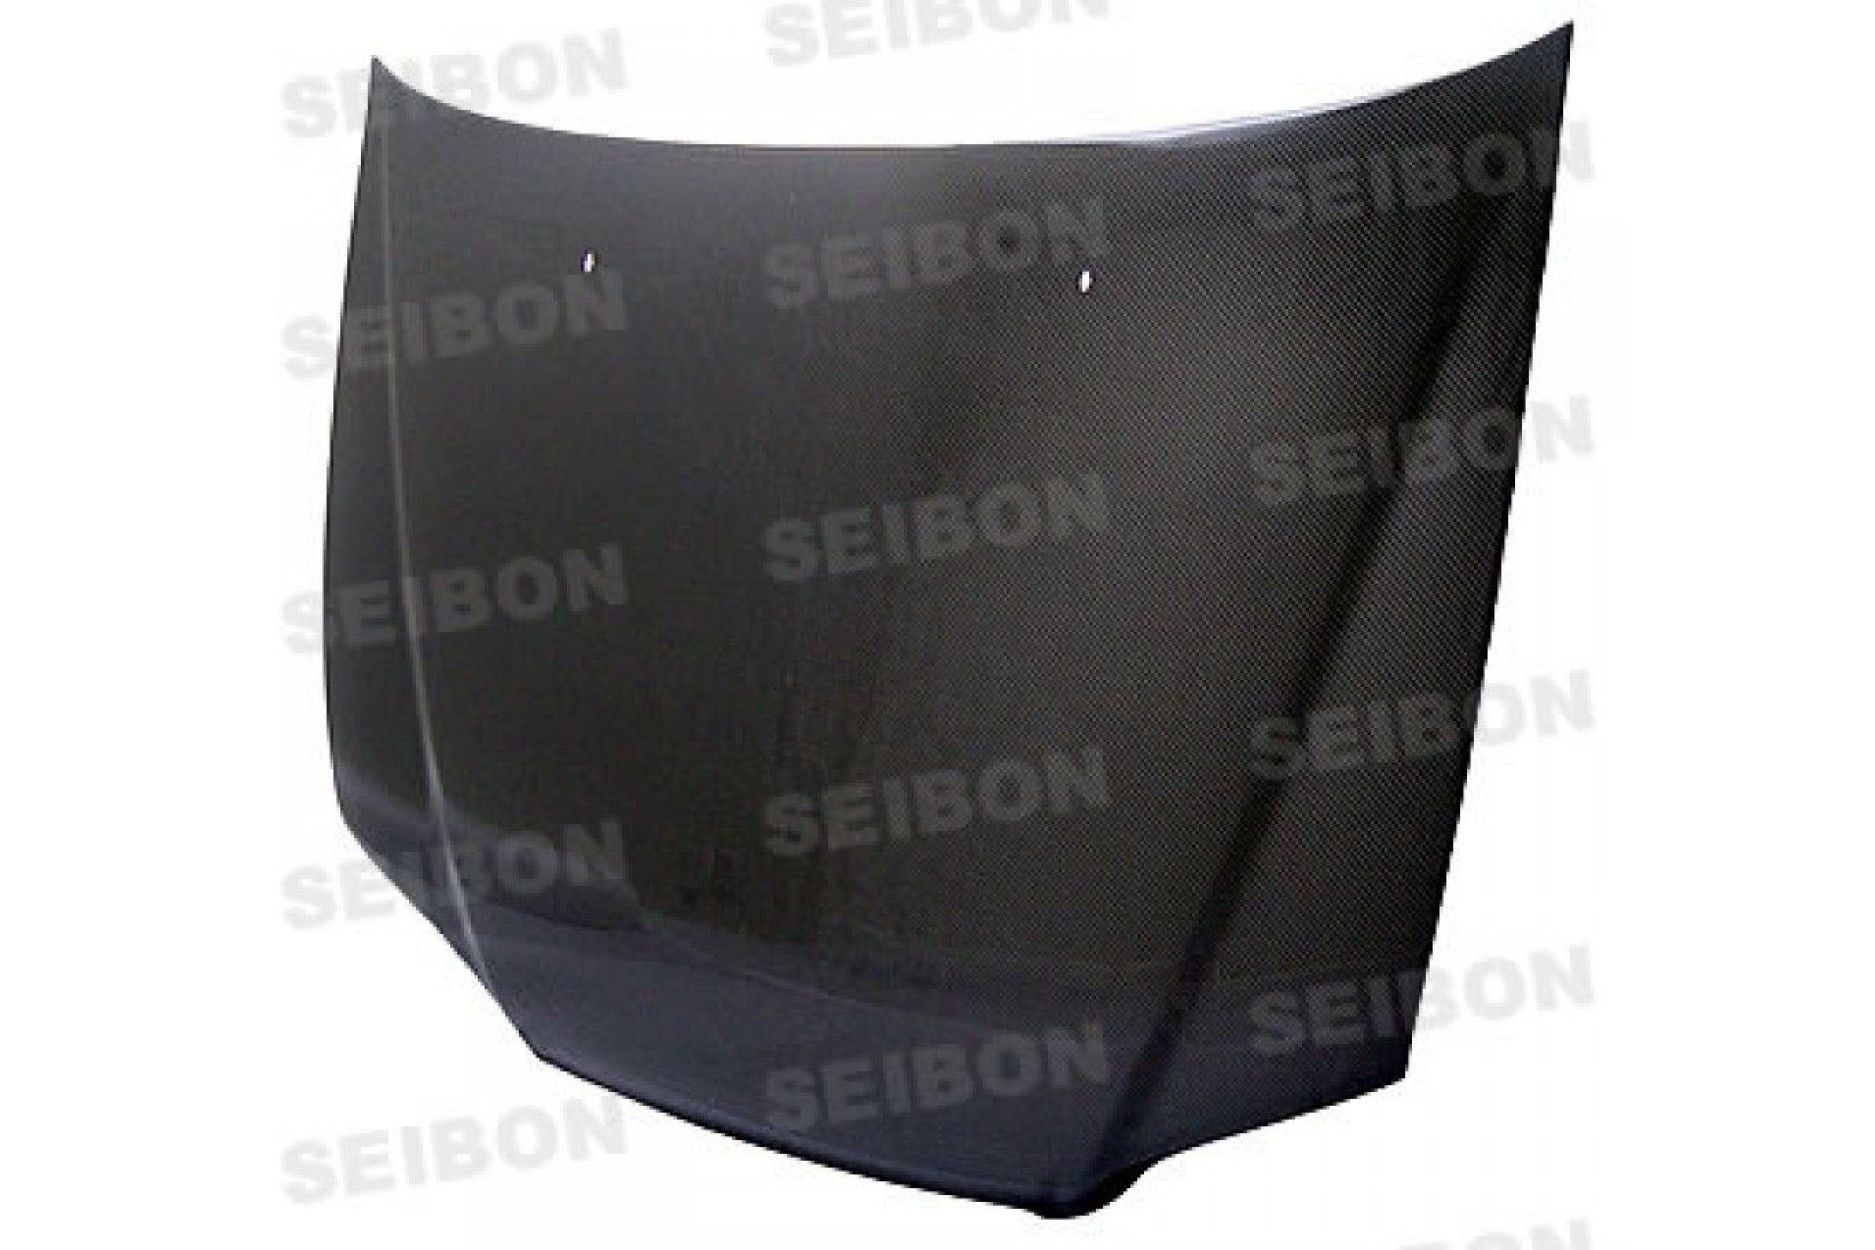 Seibon Carbon Motorhaube für Honda Accord CG1|CG5 1998 - 2002 4D OE-Style